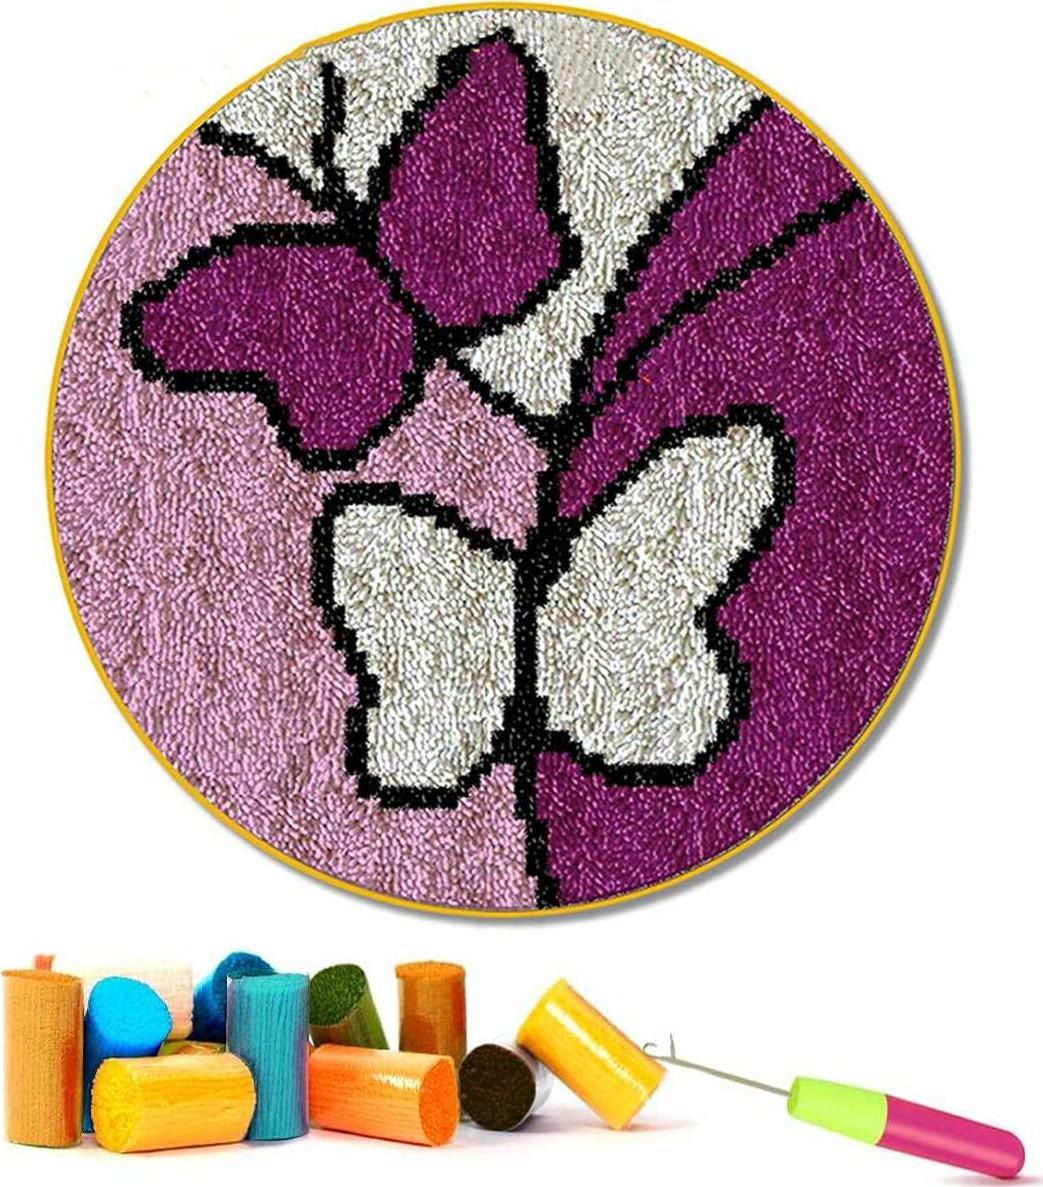 Emistem, Emistem Latch Hook Kits Rug Making Kits DIY for Kids/Adults/Beginner with Printed Canvas Pattern, Gift Packaging Handmade Crafts, 21 X 21 Butterfly Flowers